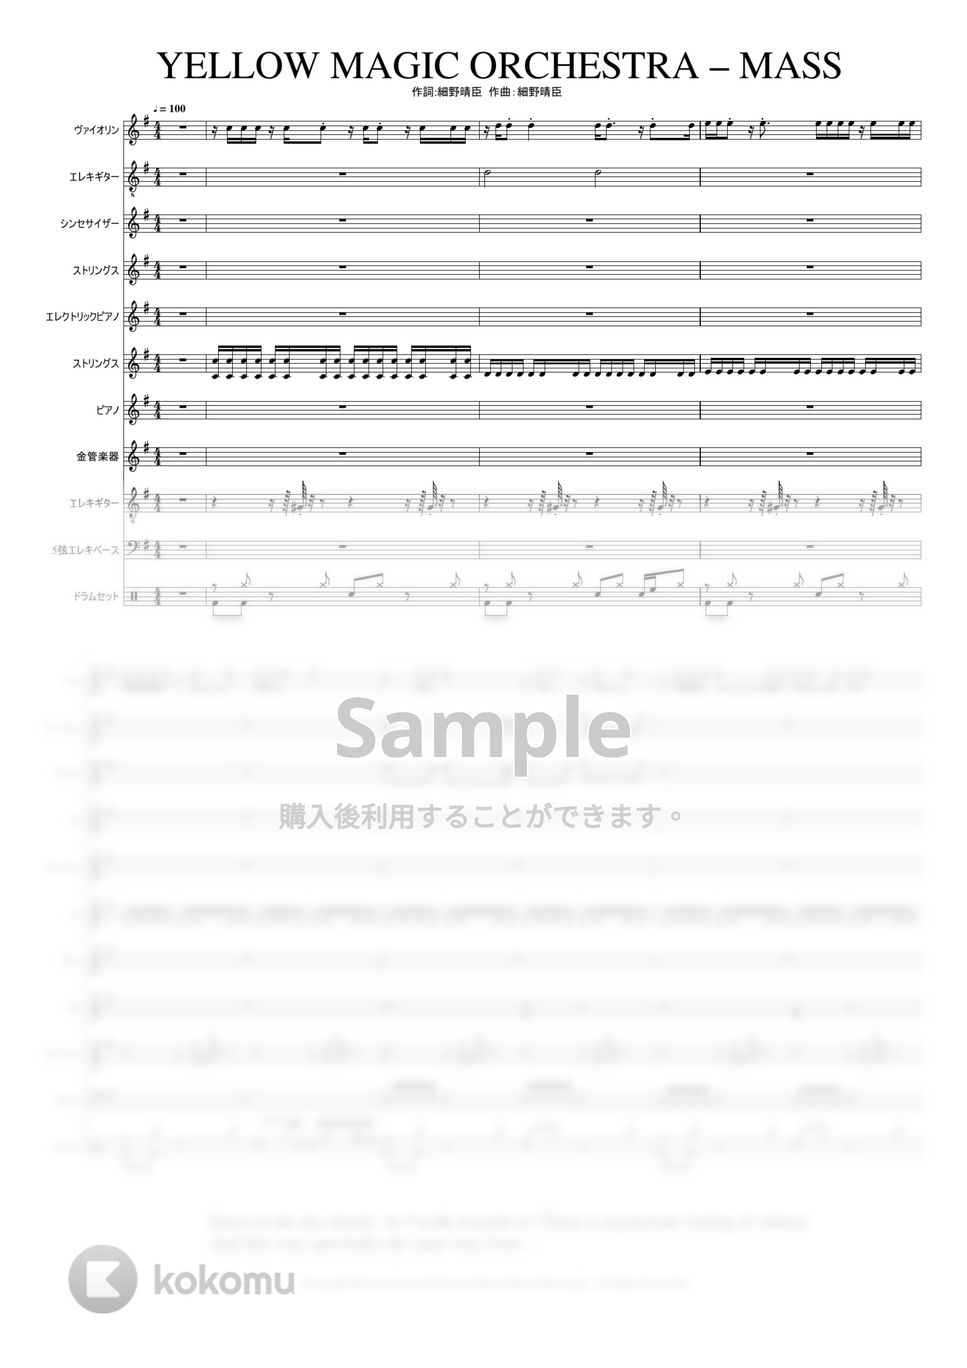 YMO - Mass (作詞・作曲 · 細野晴臣) by @MitsuruMinamiyama